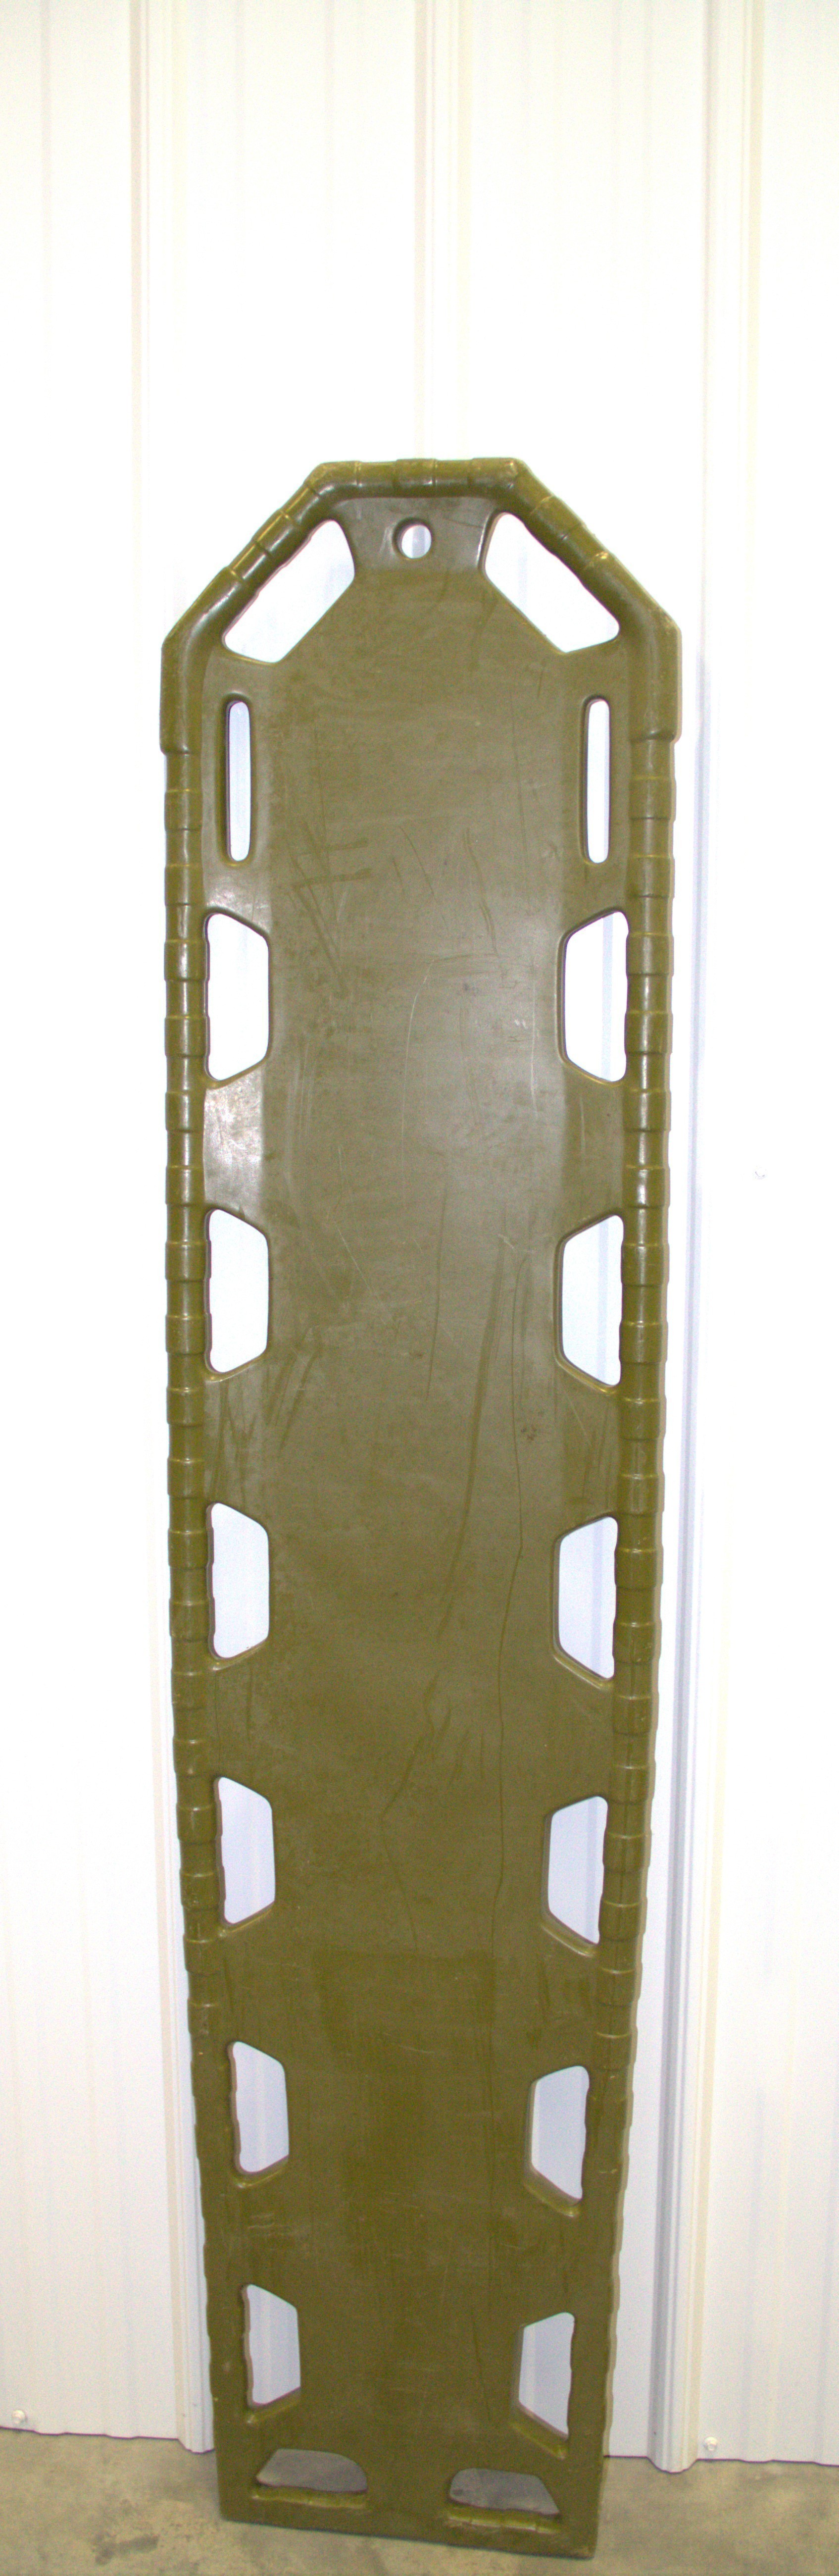 Stretcher Military Backboard (plastic)